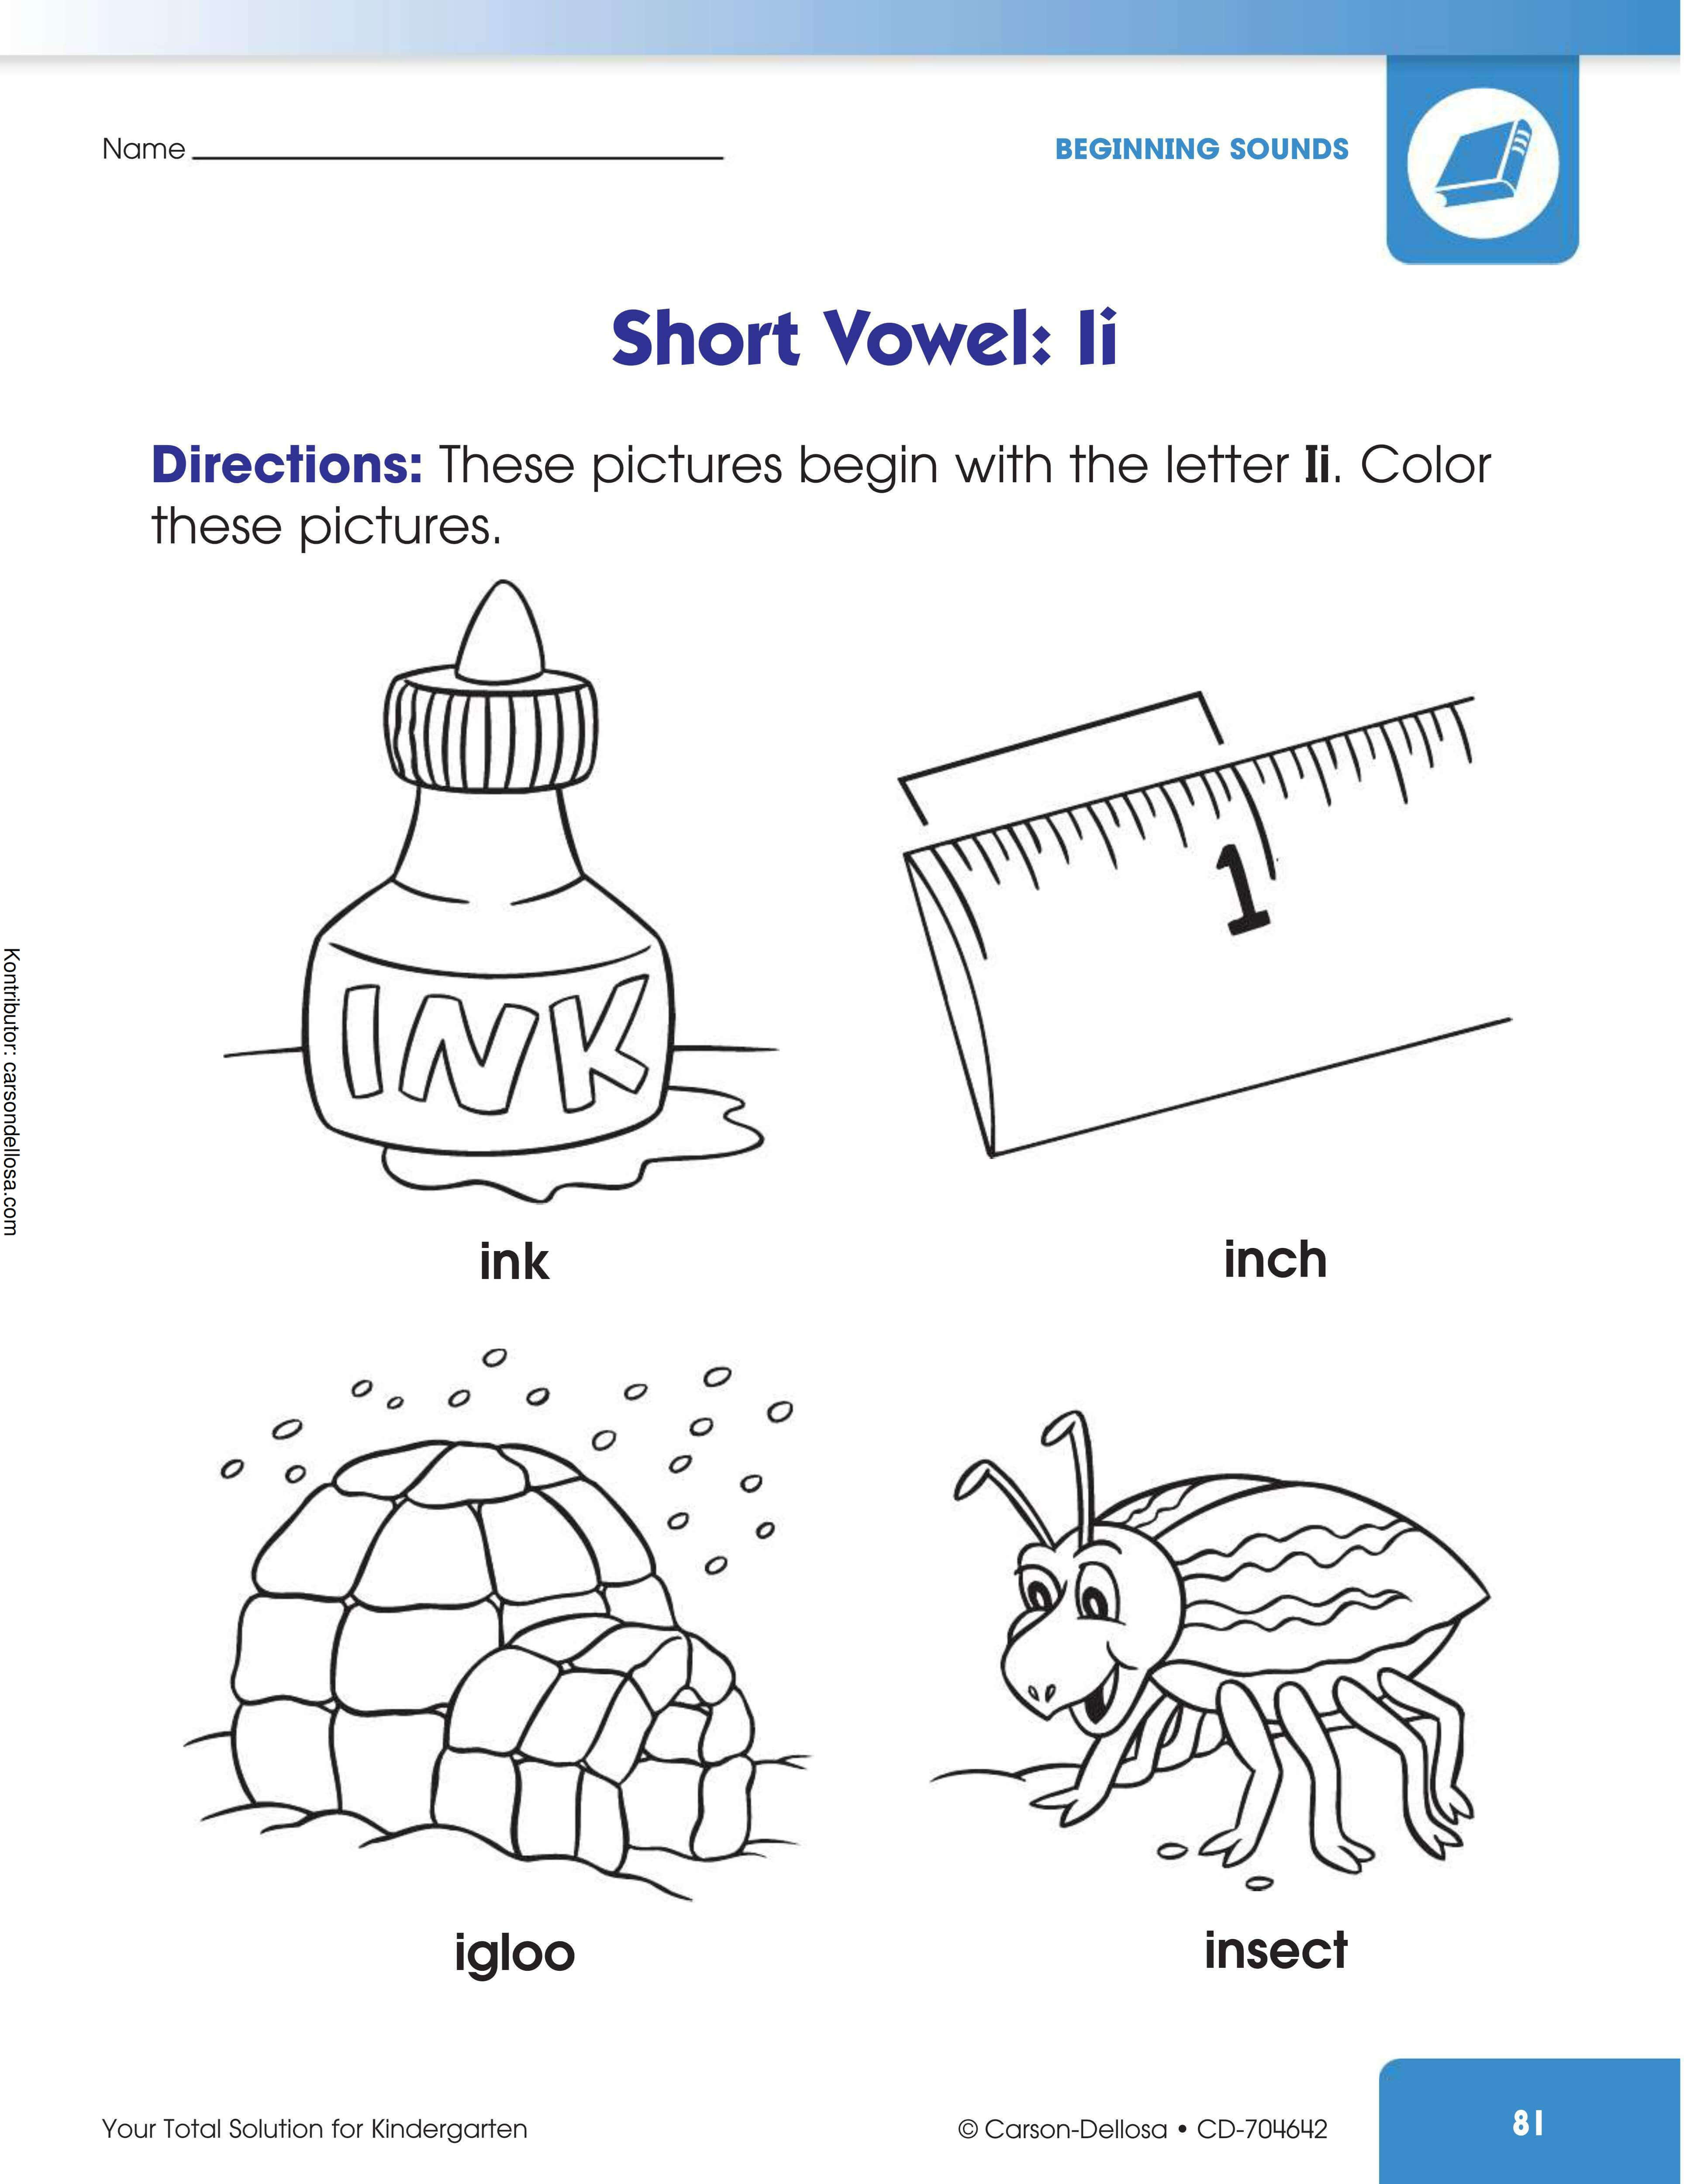 Belajar Mengenal Huruf Vokal "Ii" dan Mewarnai Gambar